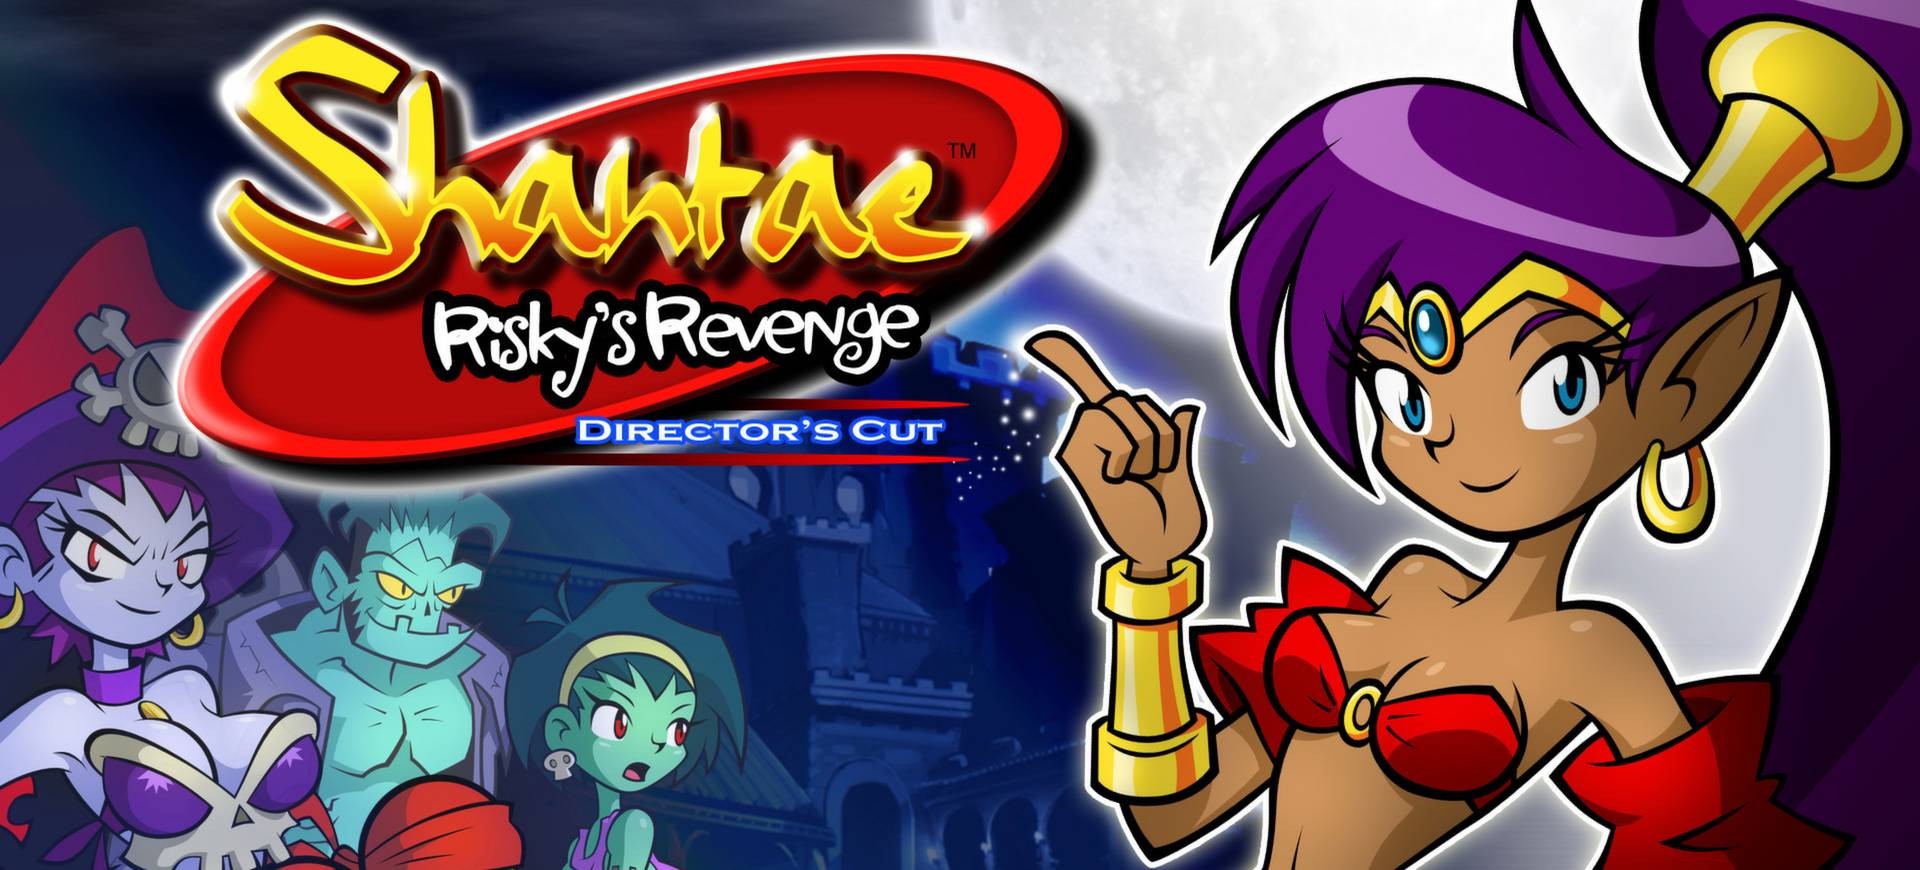 Shantae: Risky’s Revenge - Director’s Cut - Đánh Giá Game